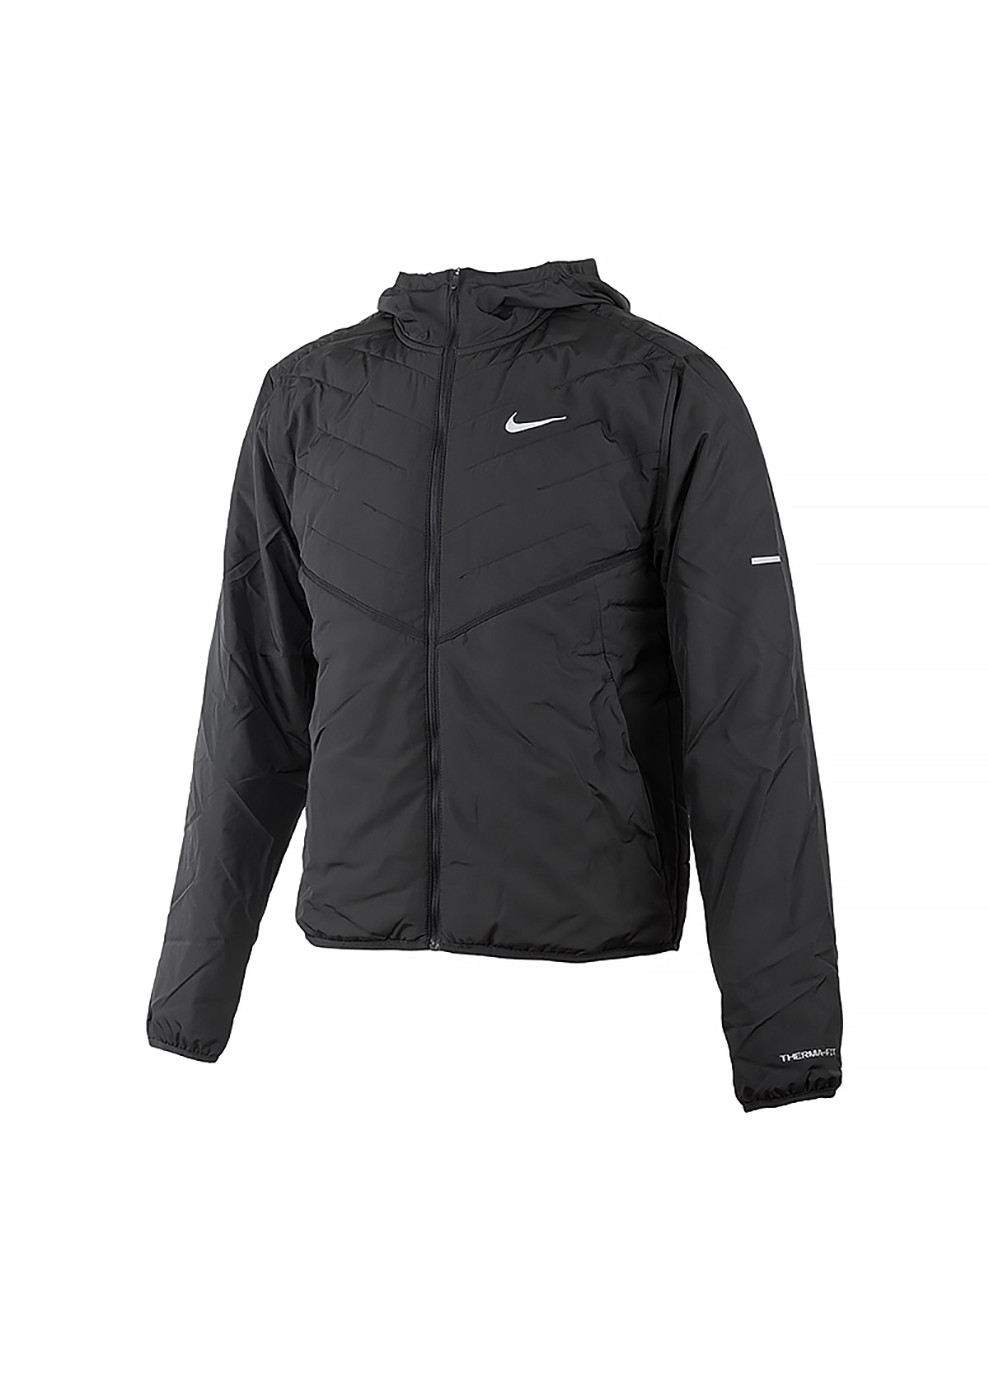 Черная демисезонная мужская куртка m nk tf synfl rpl jkt arolyr черный 2xl (dd5644-010 2xl) Nike